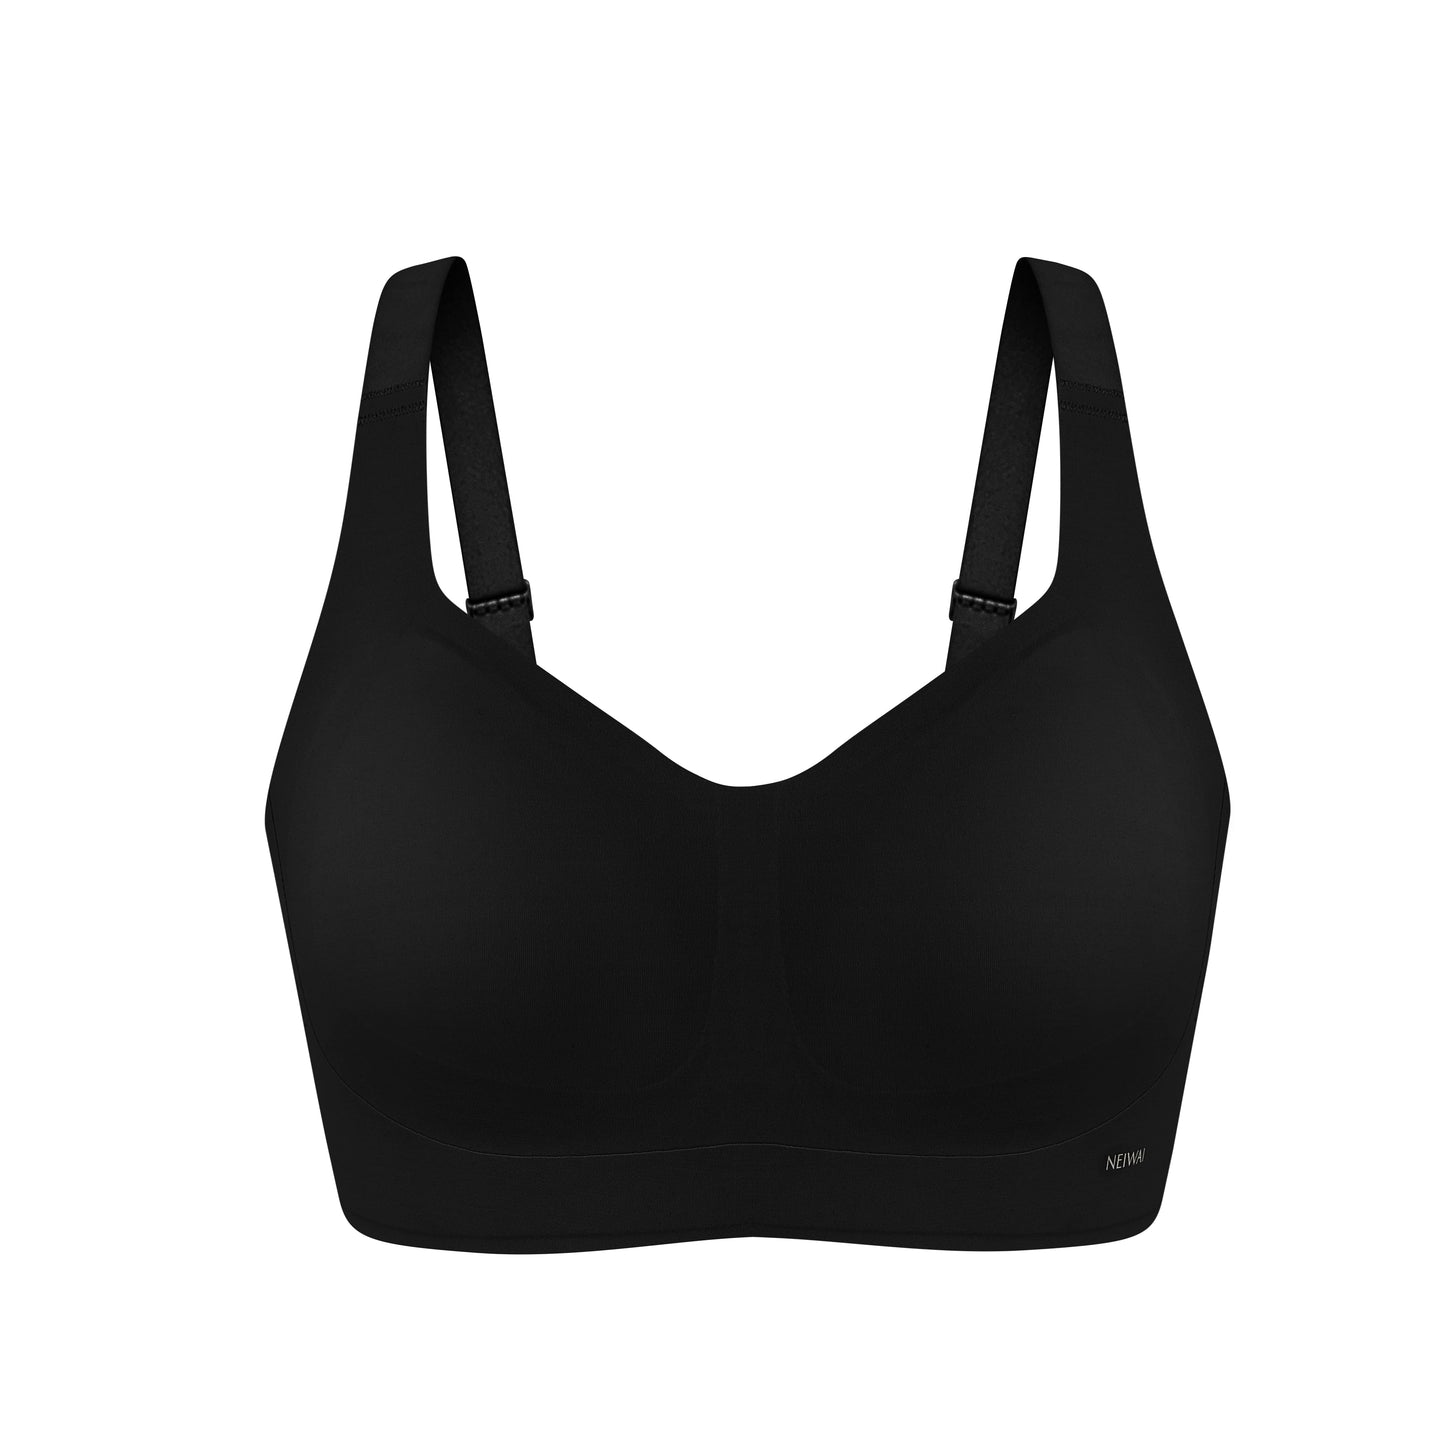 image of a black bra